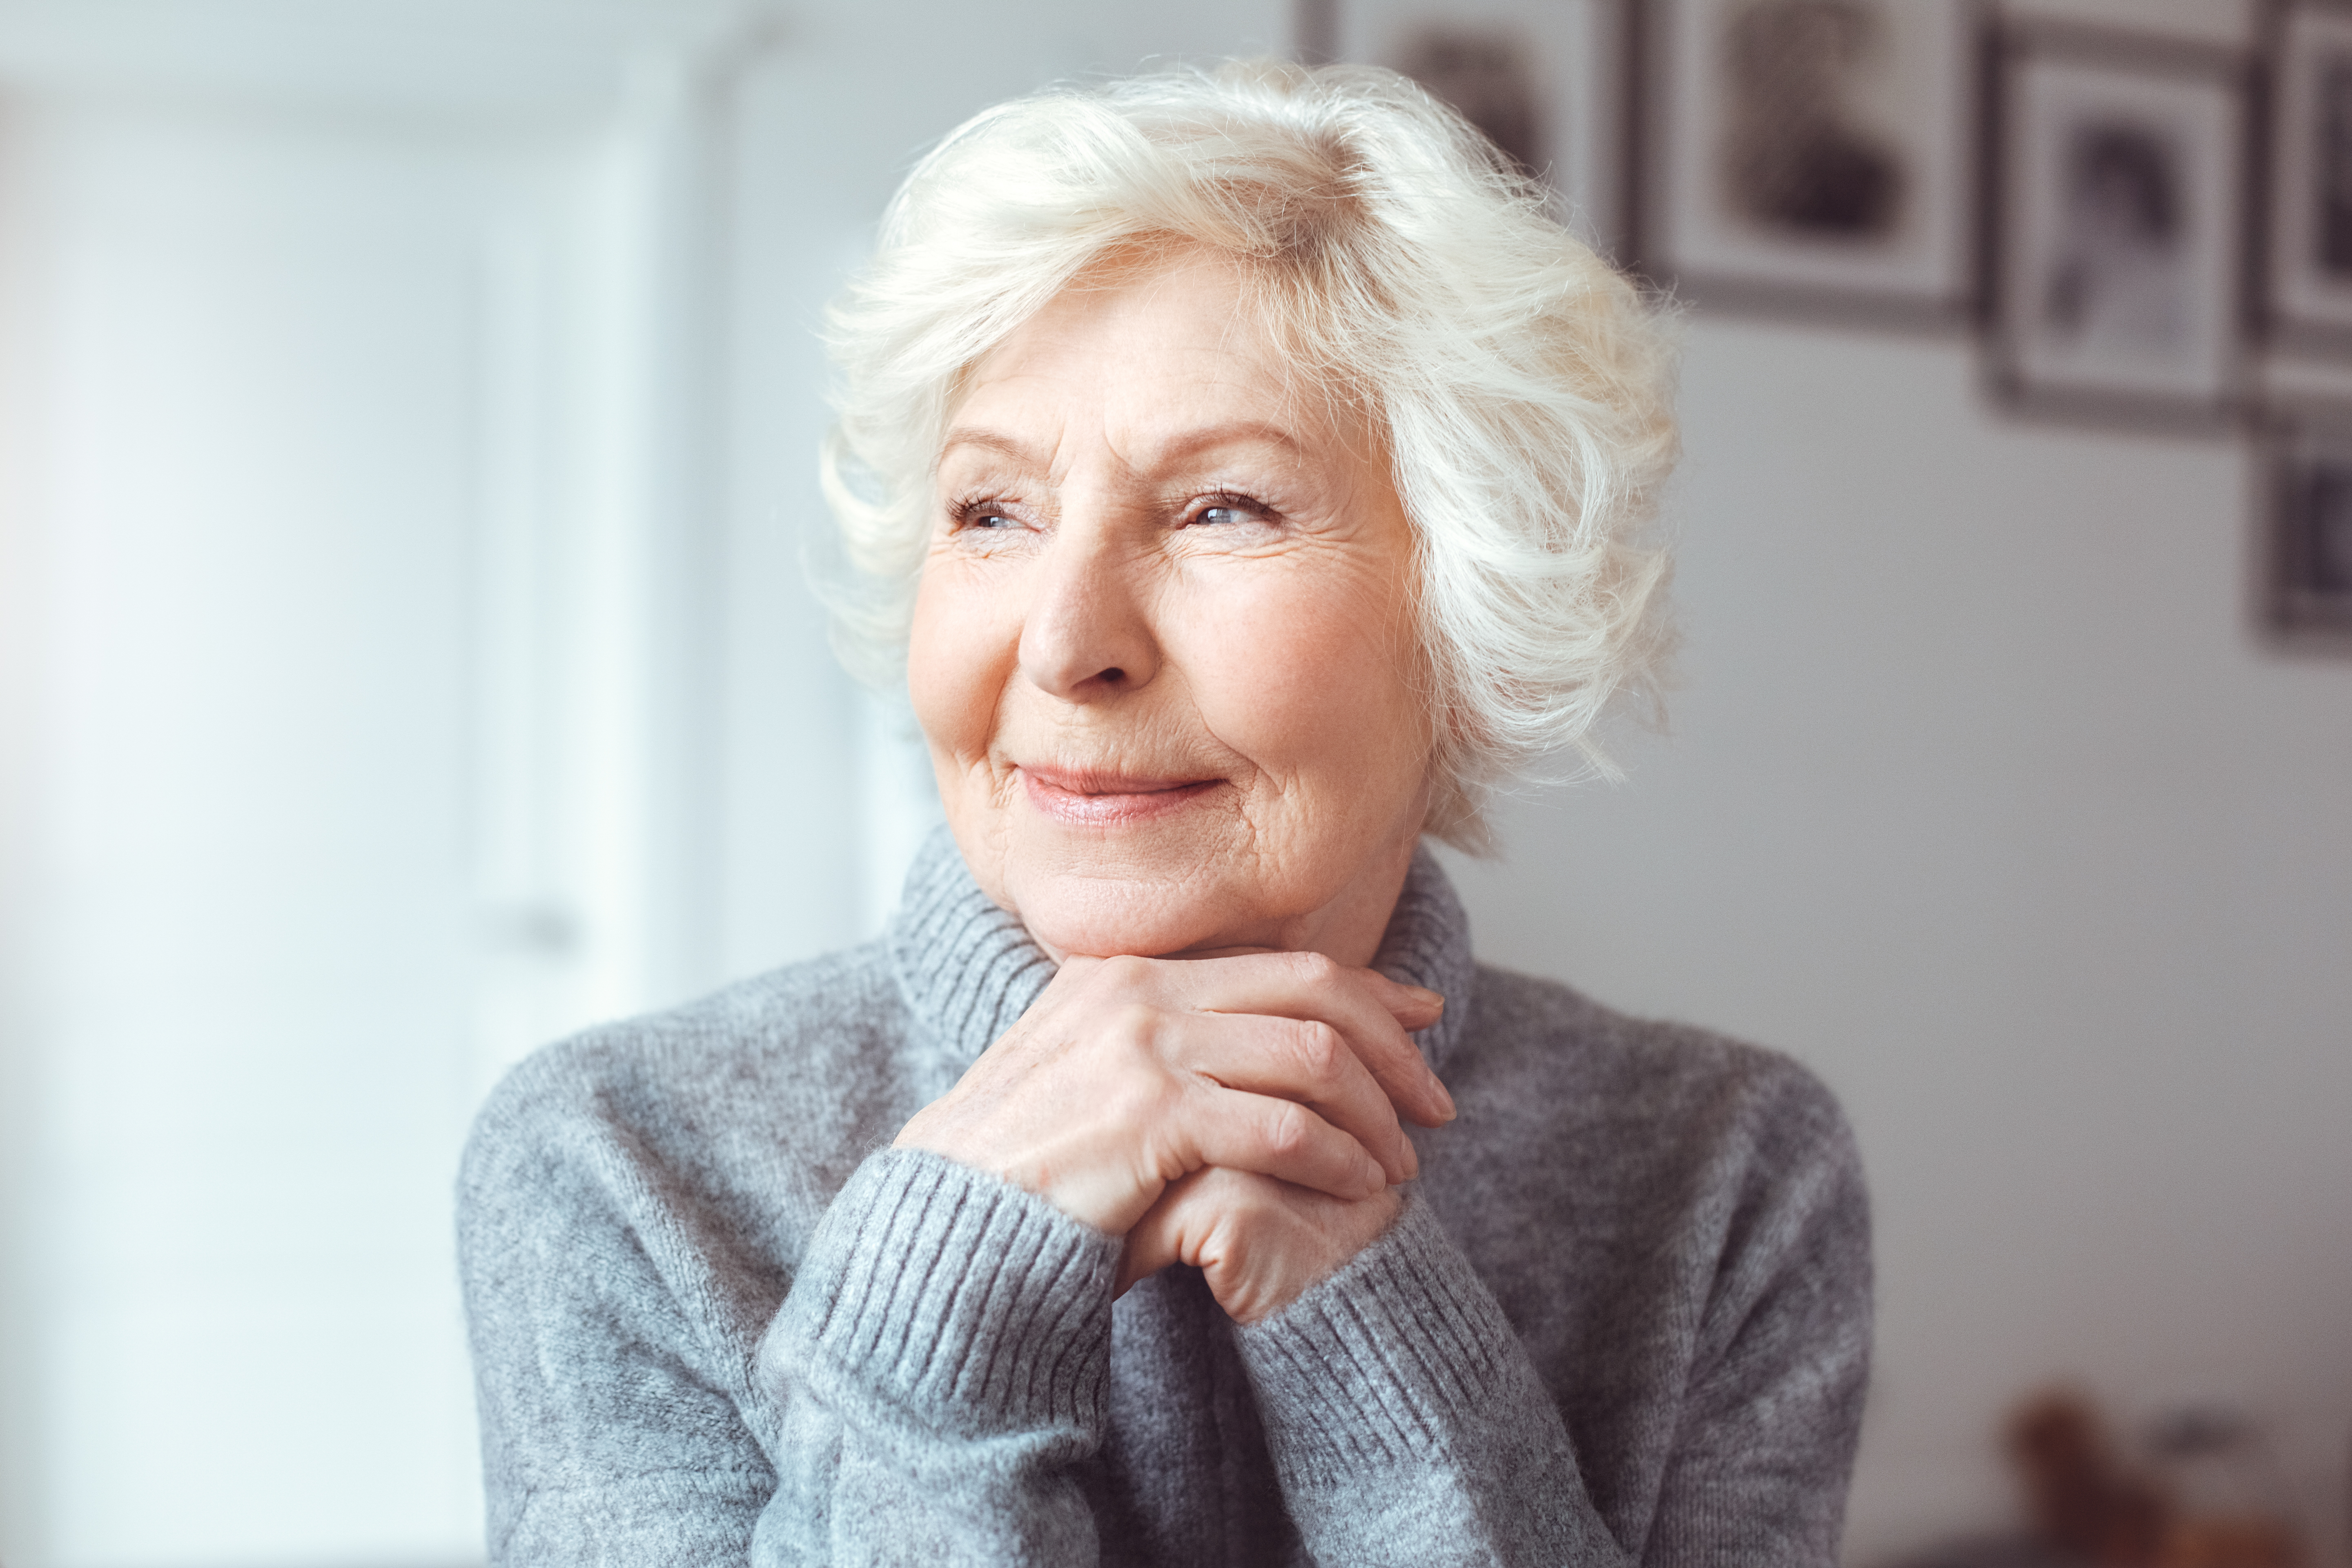 A smiling senior woman | Source: Shutterstock